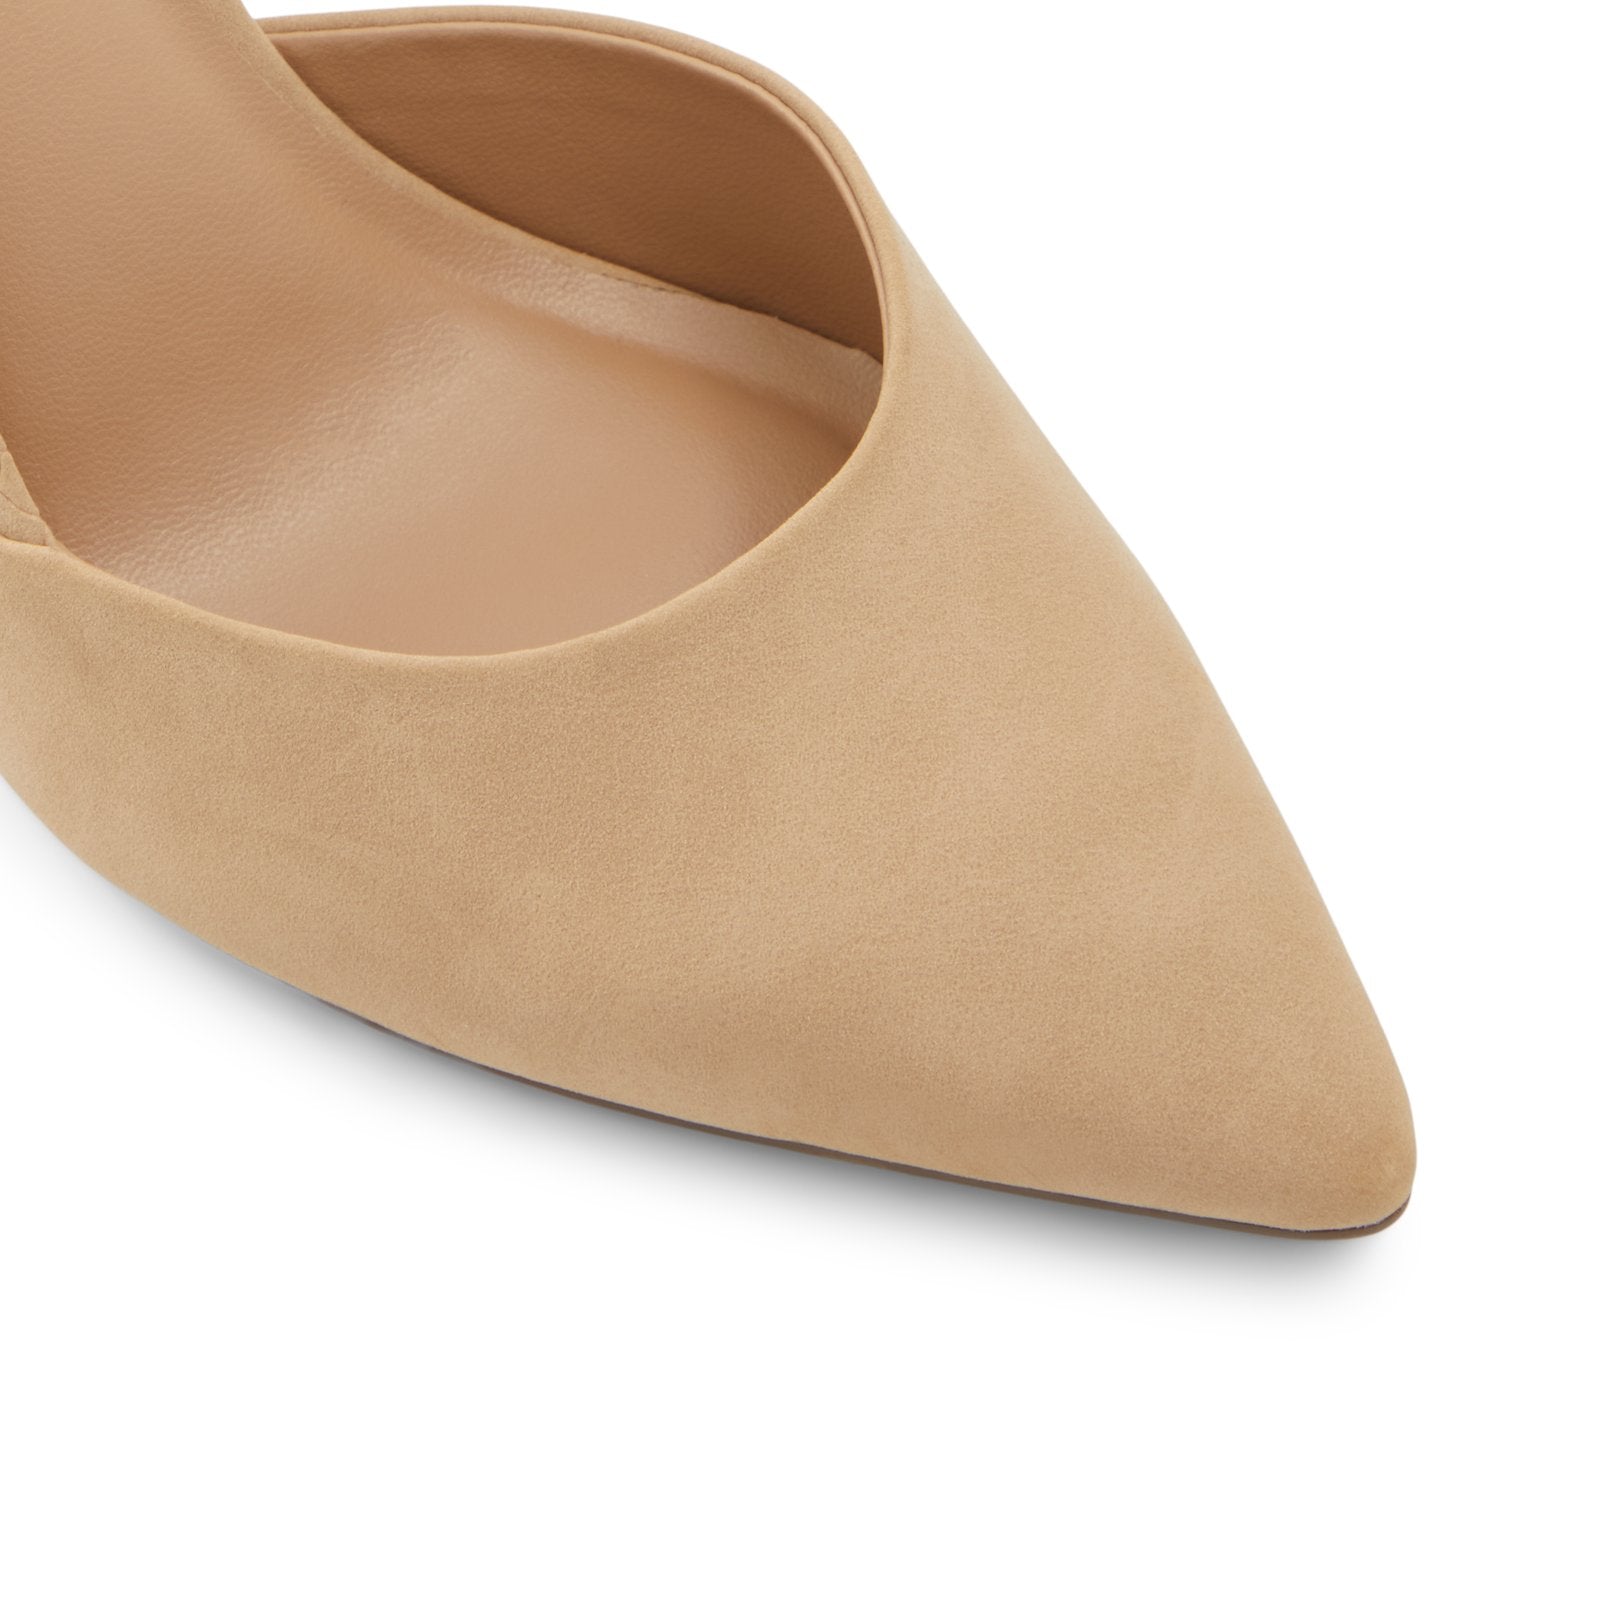 Ariaa / Heeled Sandals Women Shoes - Bone - CALL IT SPRING KSA